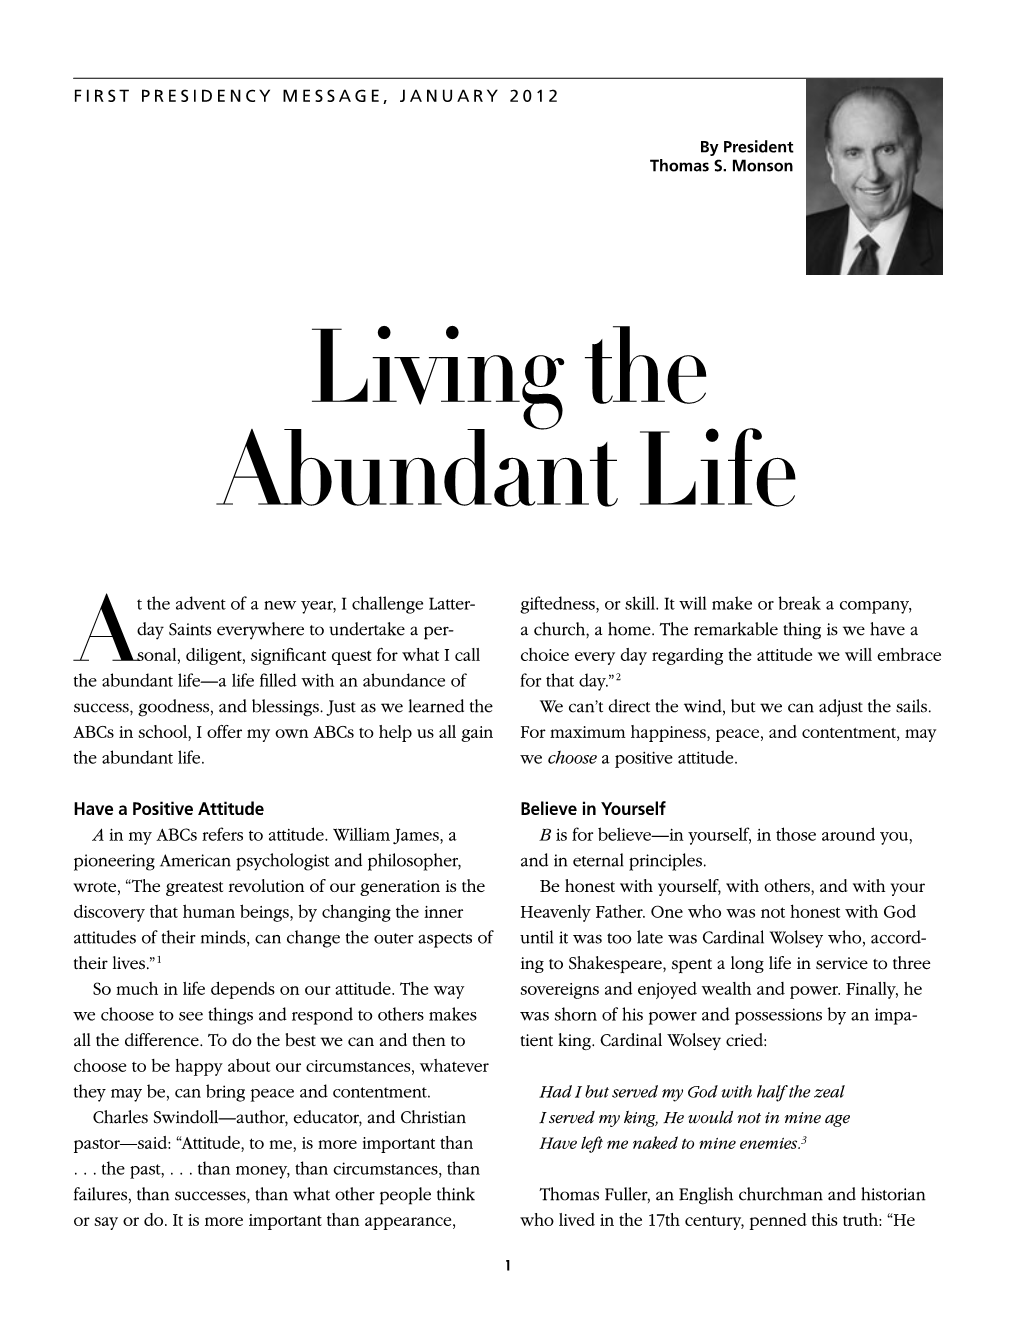 Living the Abundant Life